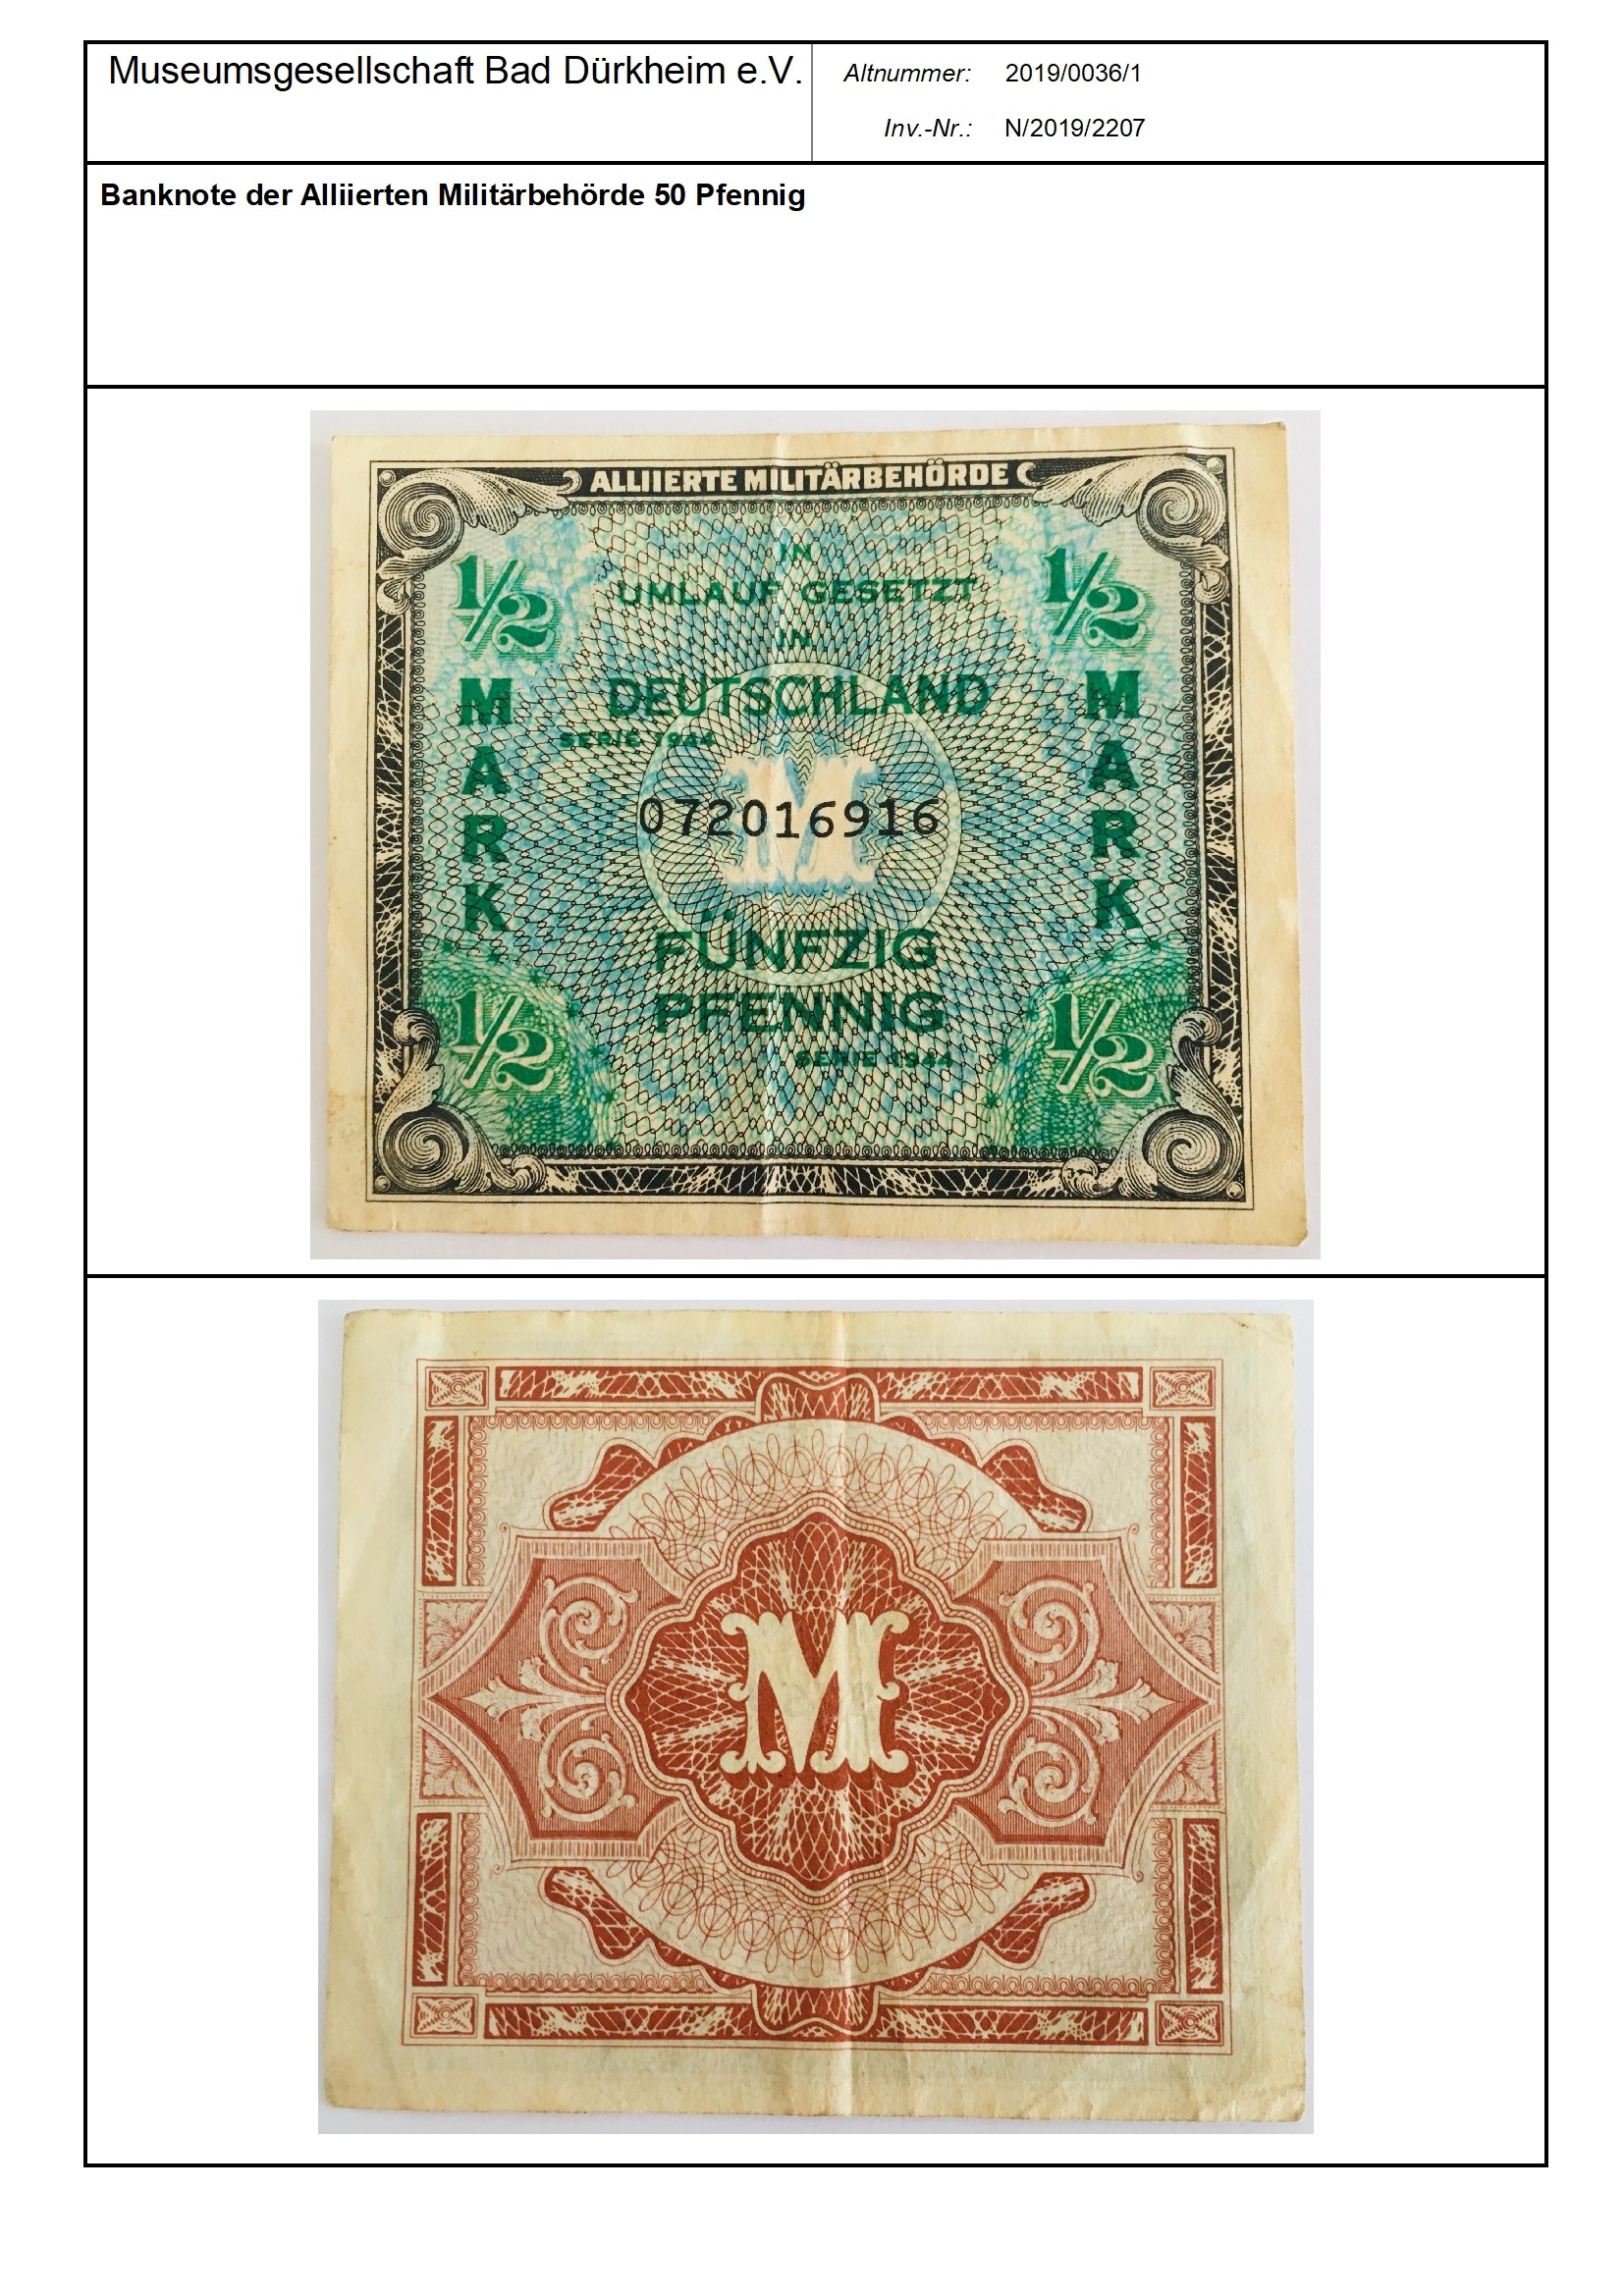 Banknote der Alliierten Militärbehörde 50 Pfennig
Serien-Nummer: 072016916 (Museumsgesellschaft Bad Dürkheim e.V. CC BY-NC-SA)